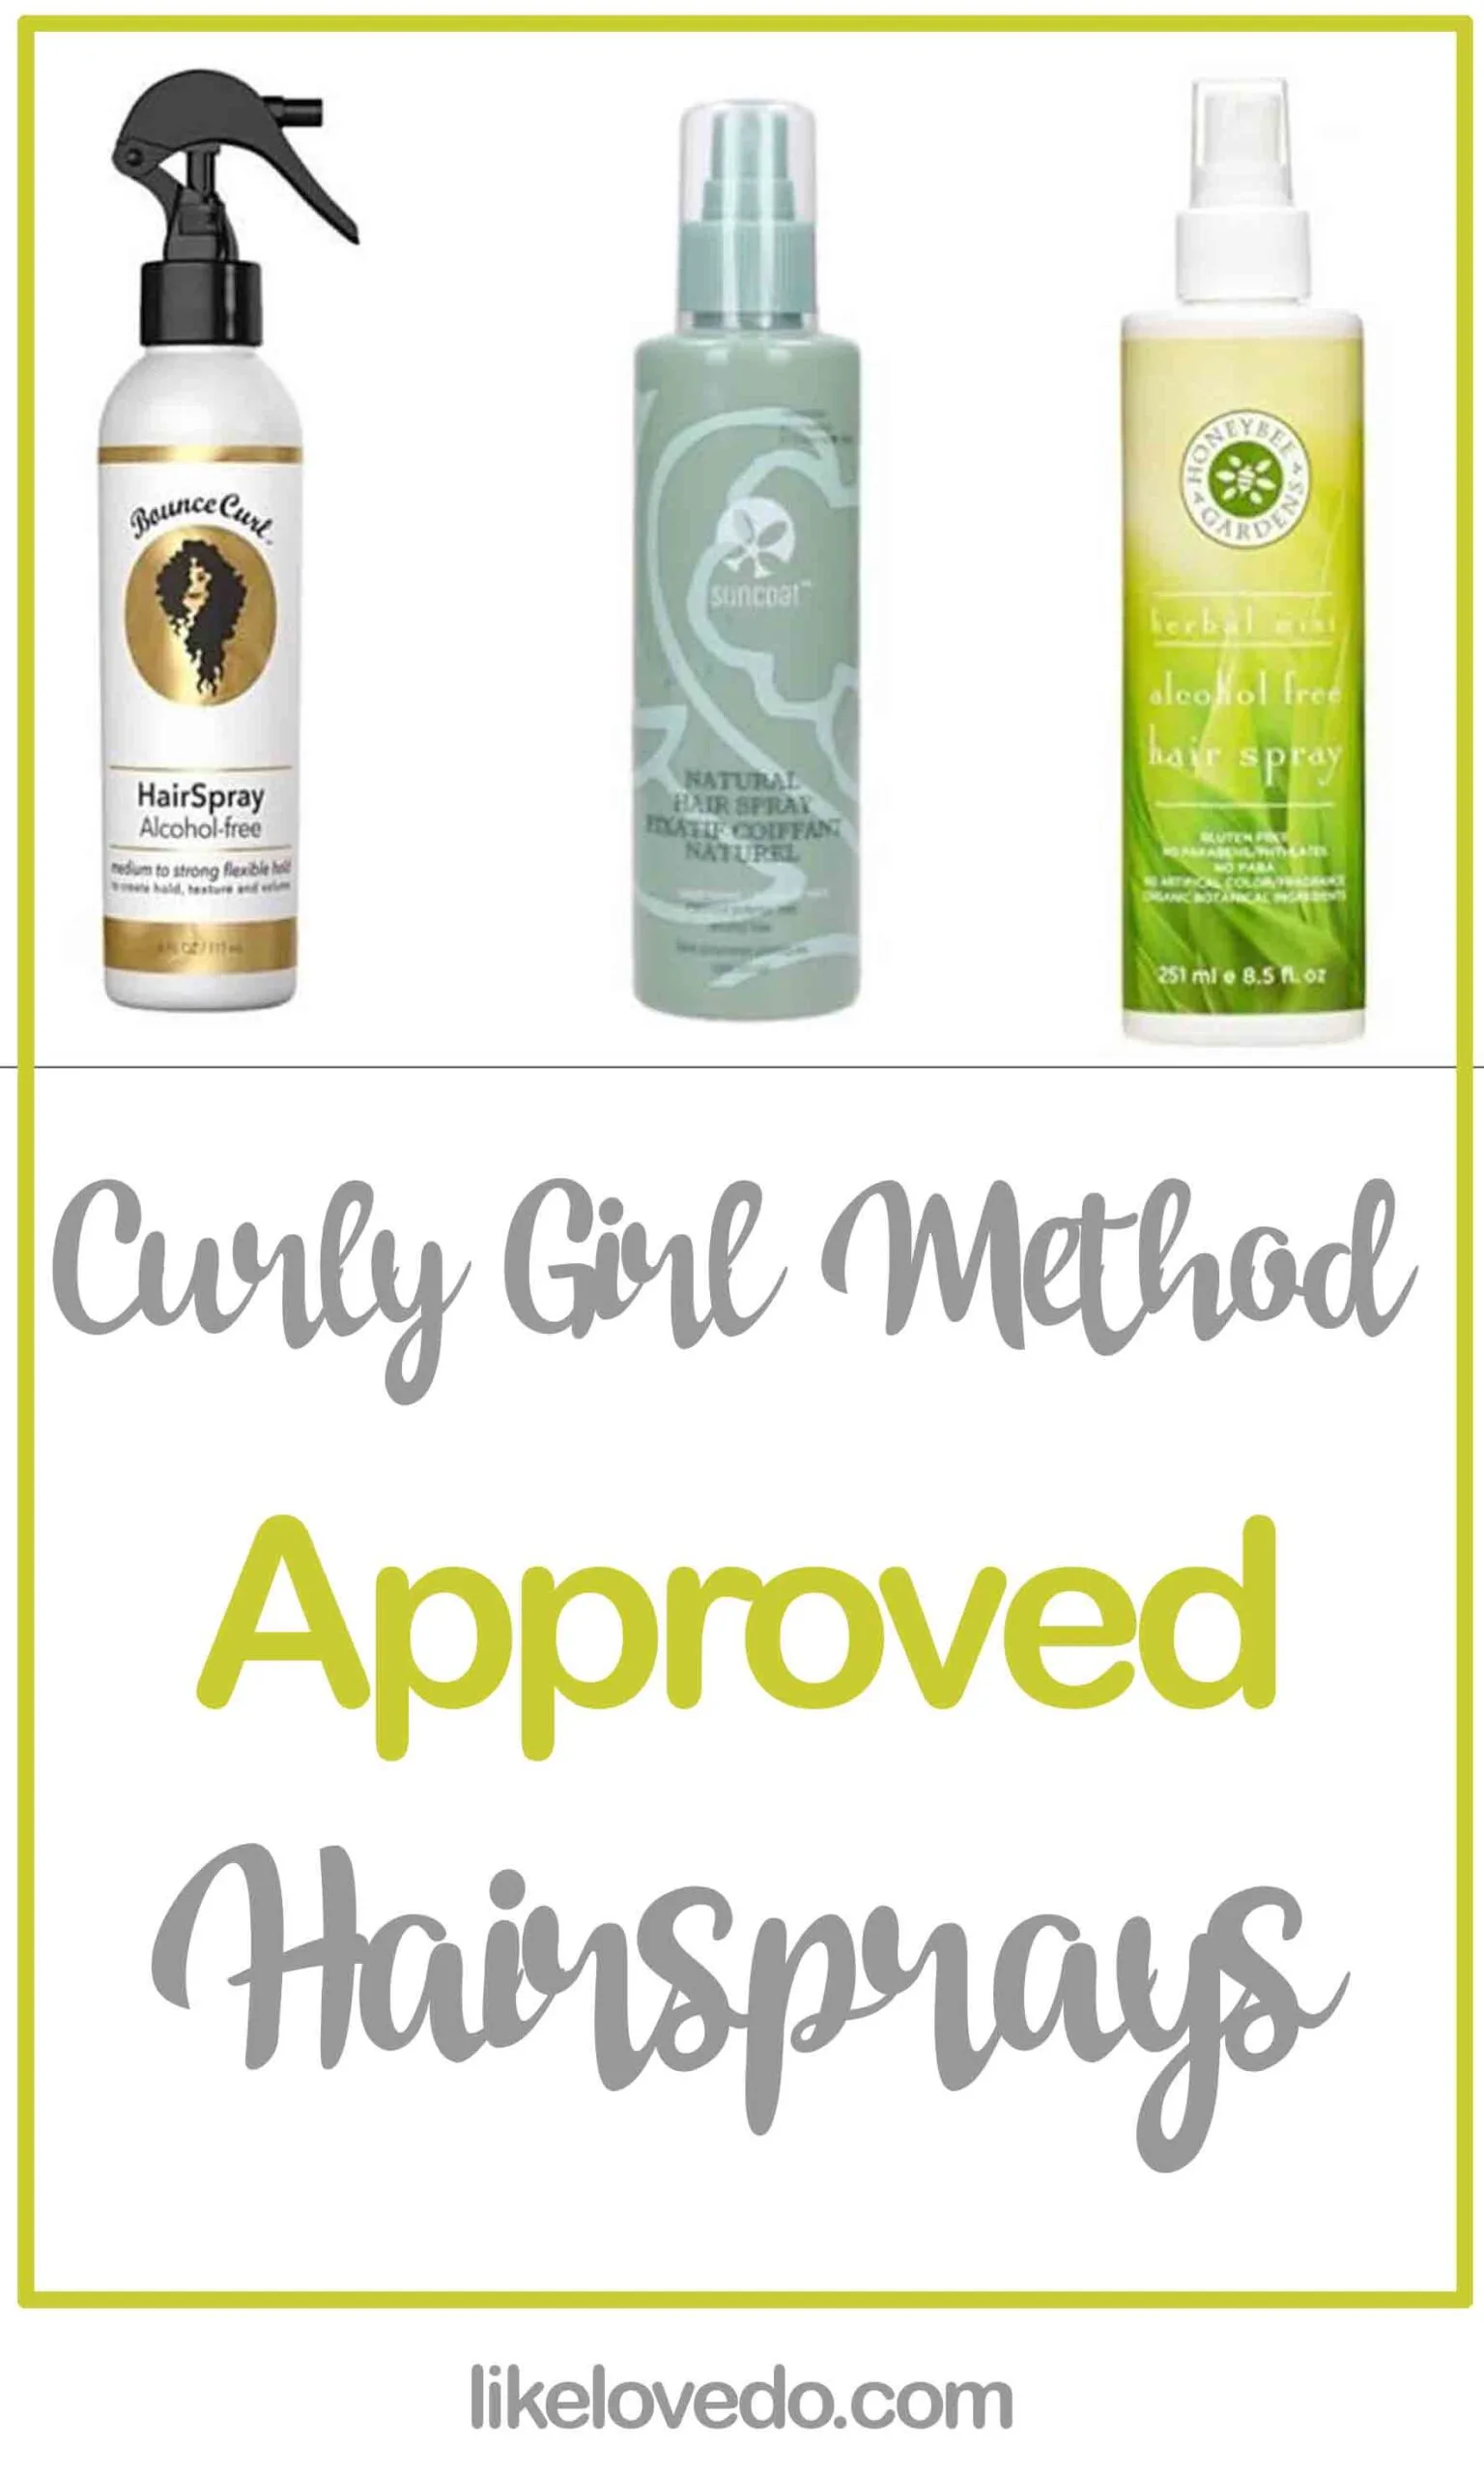 Curly Girl Method Hairsprays